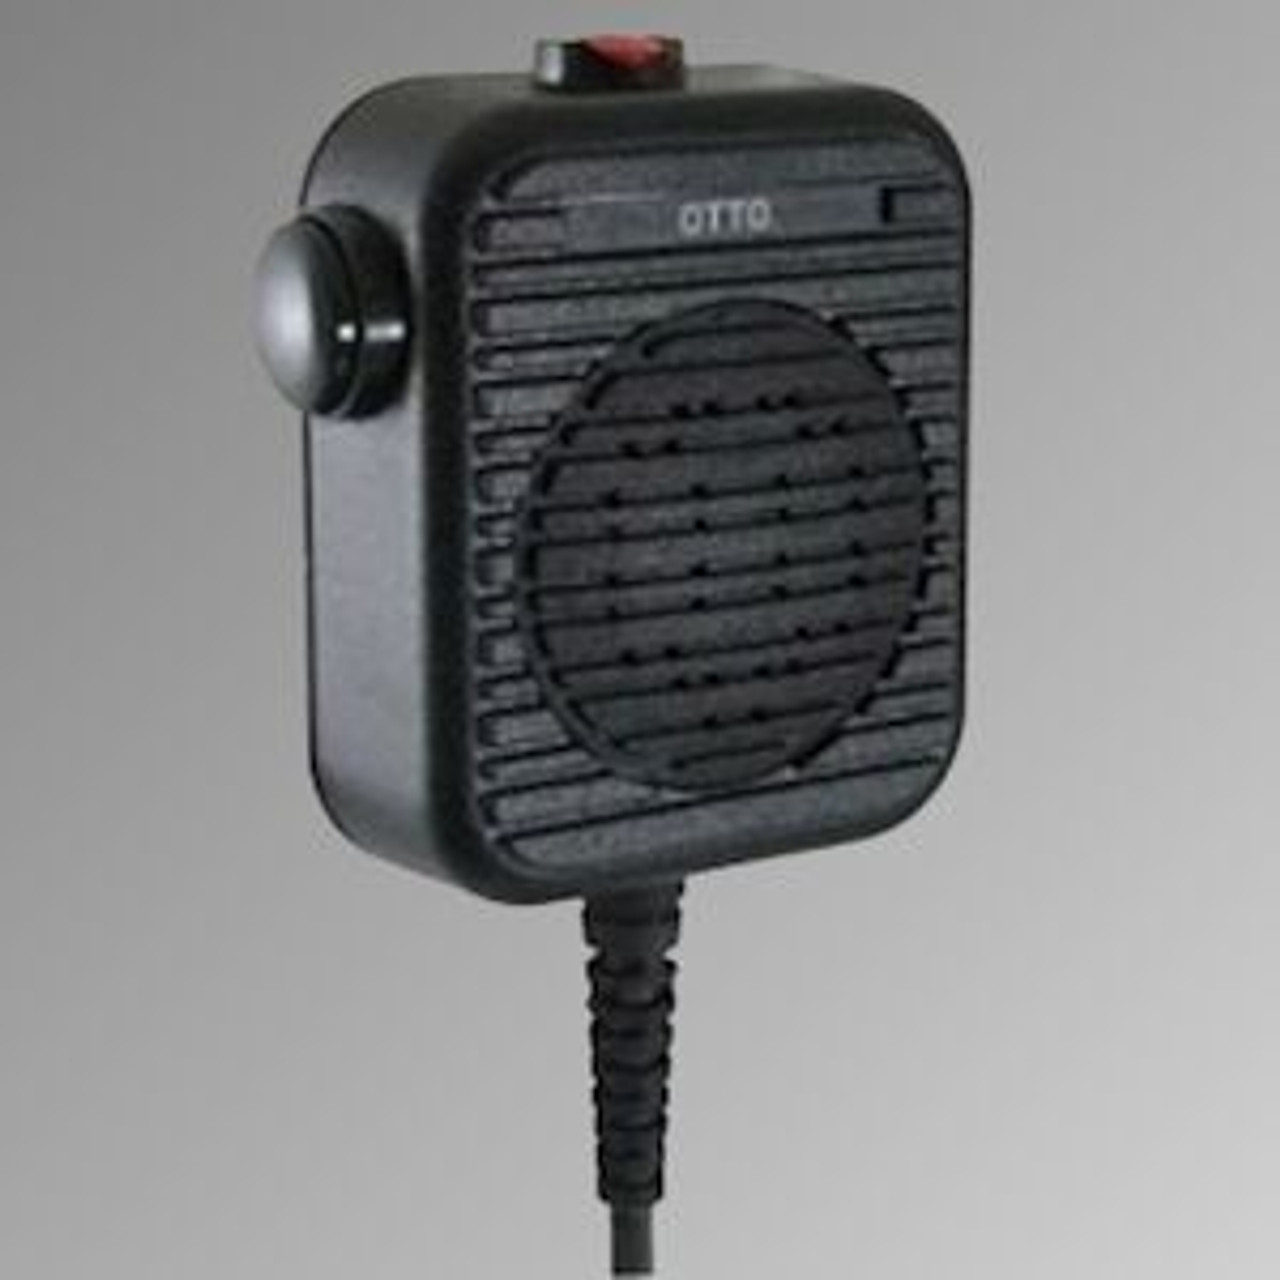 Otto Genesis II Ruggedized Speaker Mic For Harris P7300